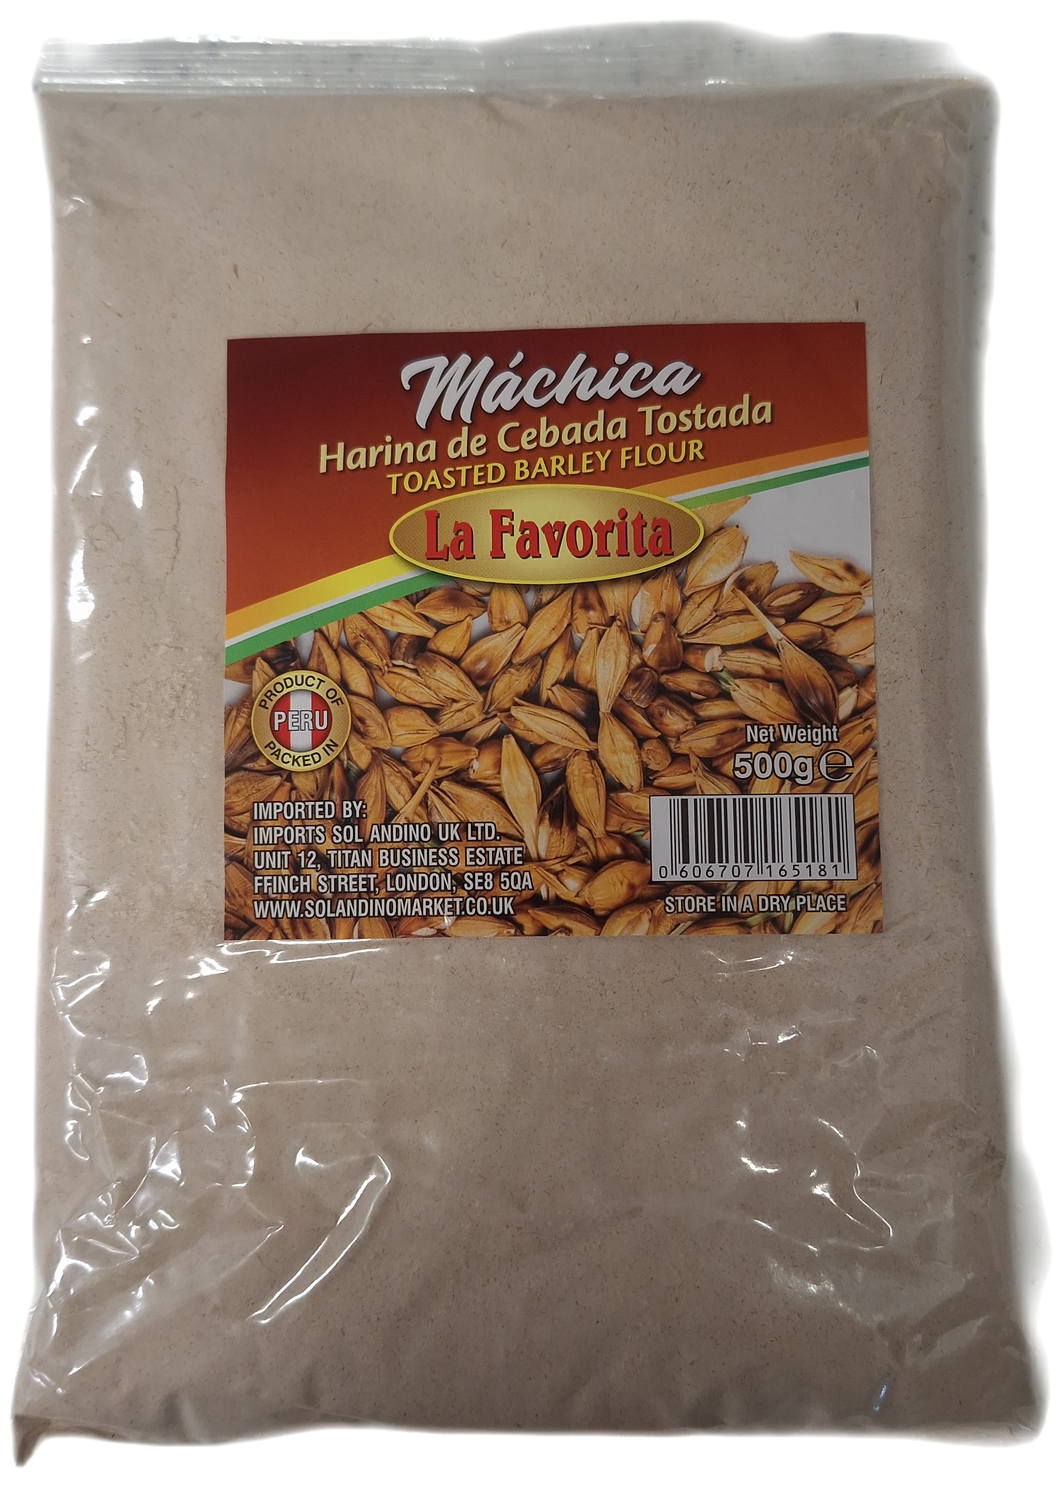 Sol Andino Barley Flour - Machica 500g